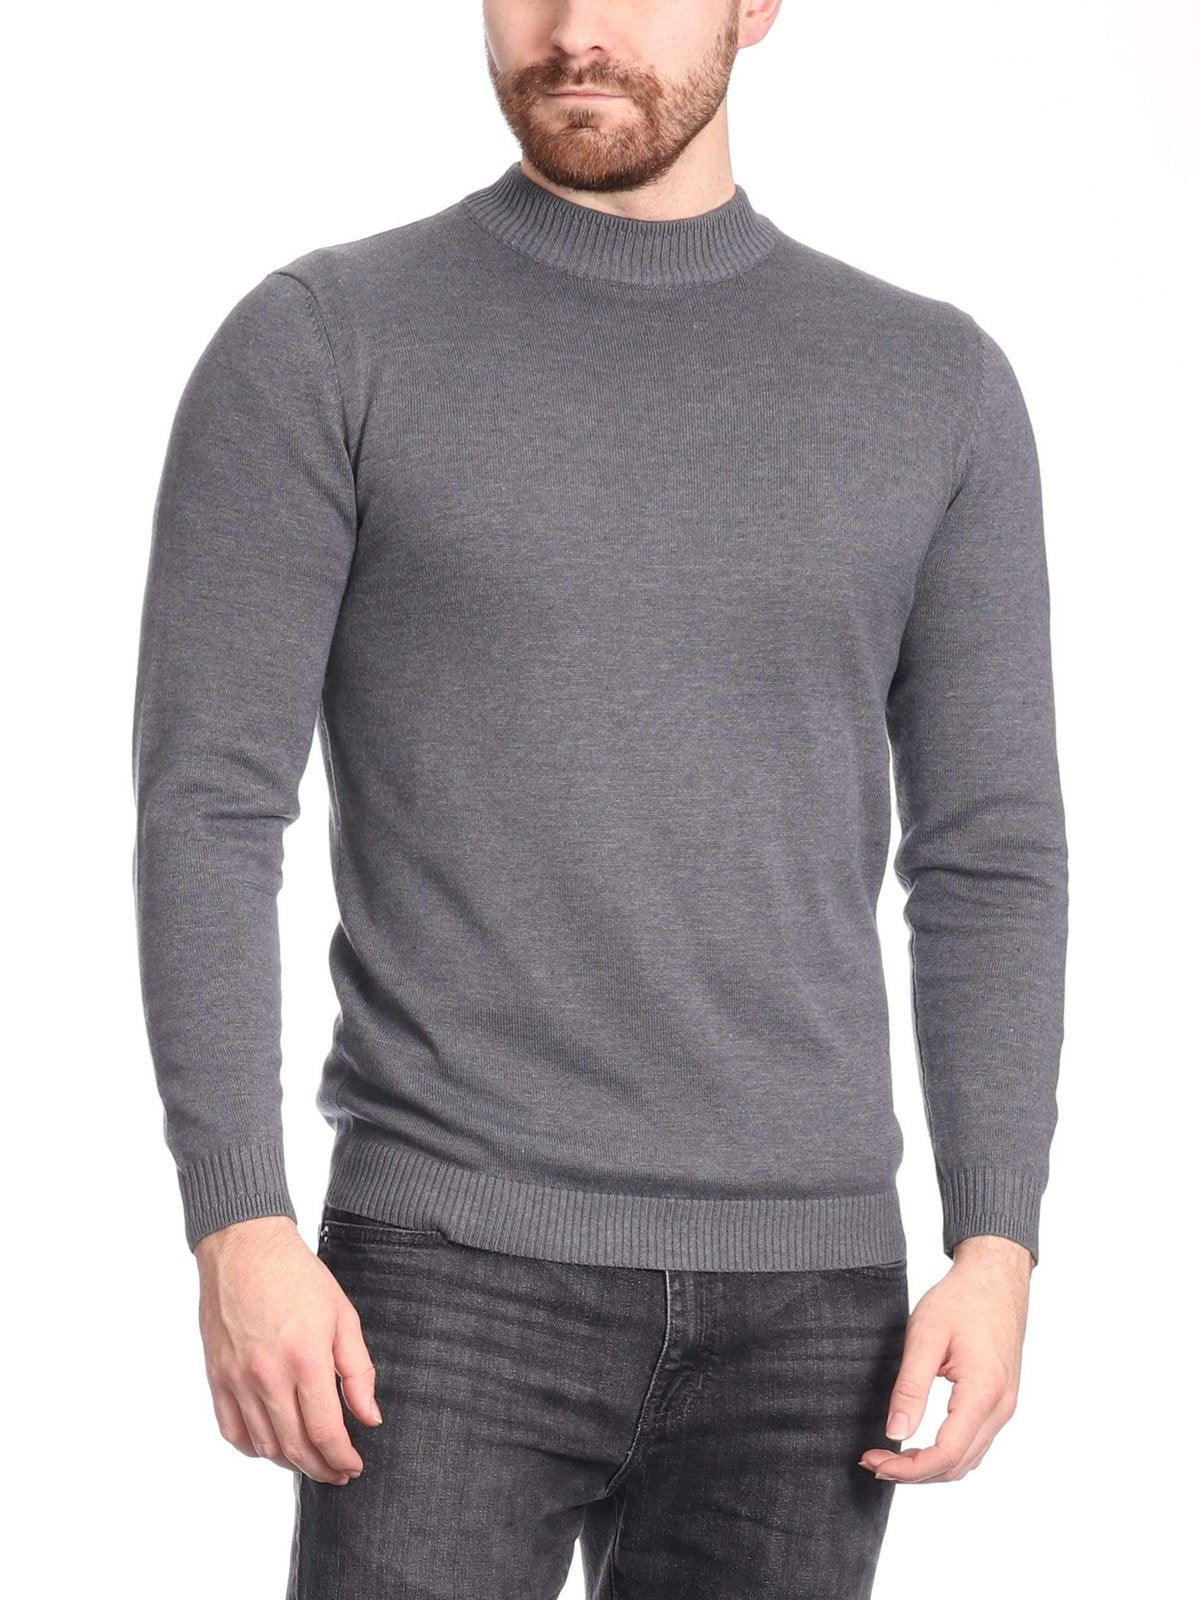 Arthur Black SWEATERS Arthur Black Men’s Charcoal Gray Pullover Cotton Blend Mock Neck Sweater Shirt